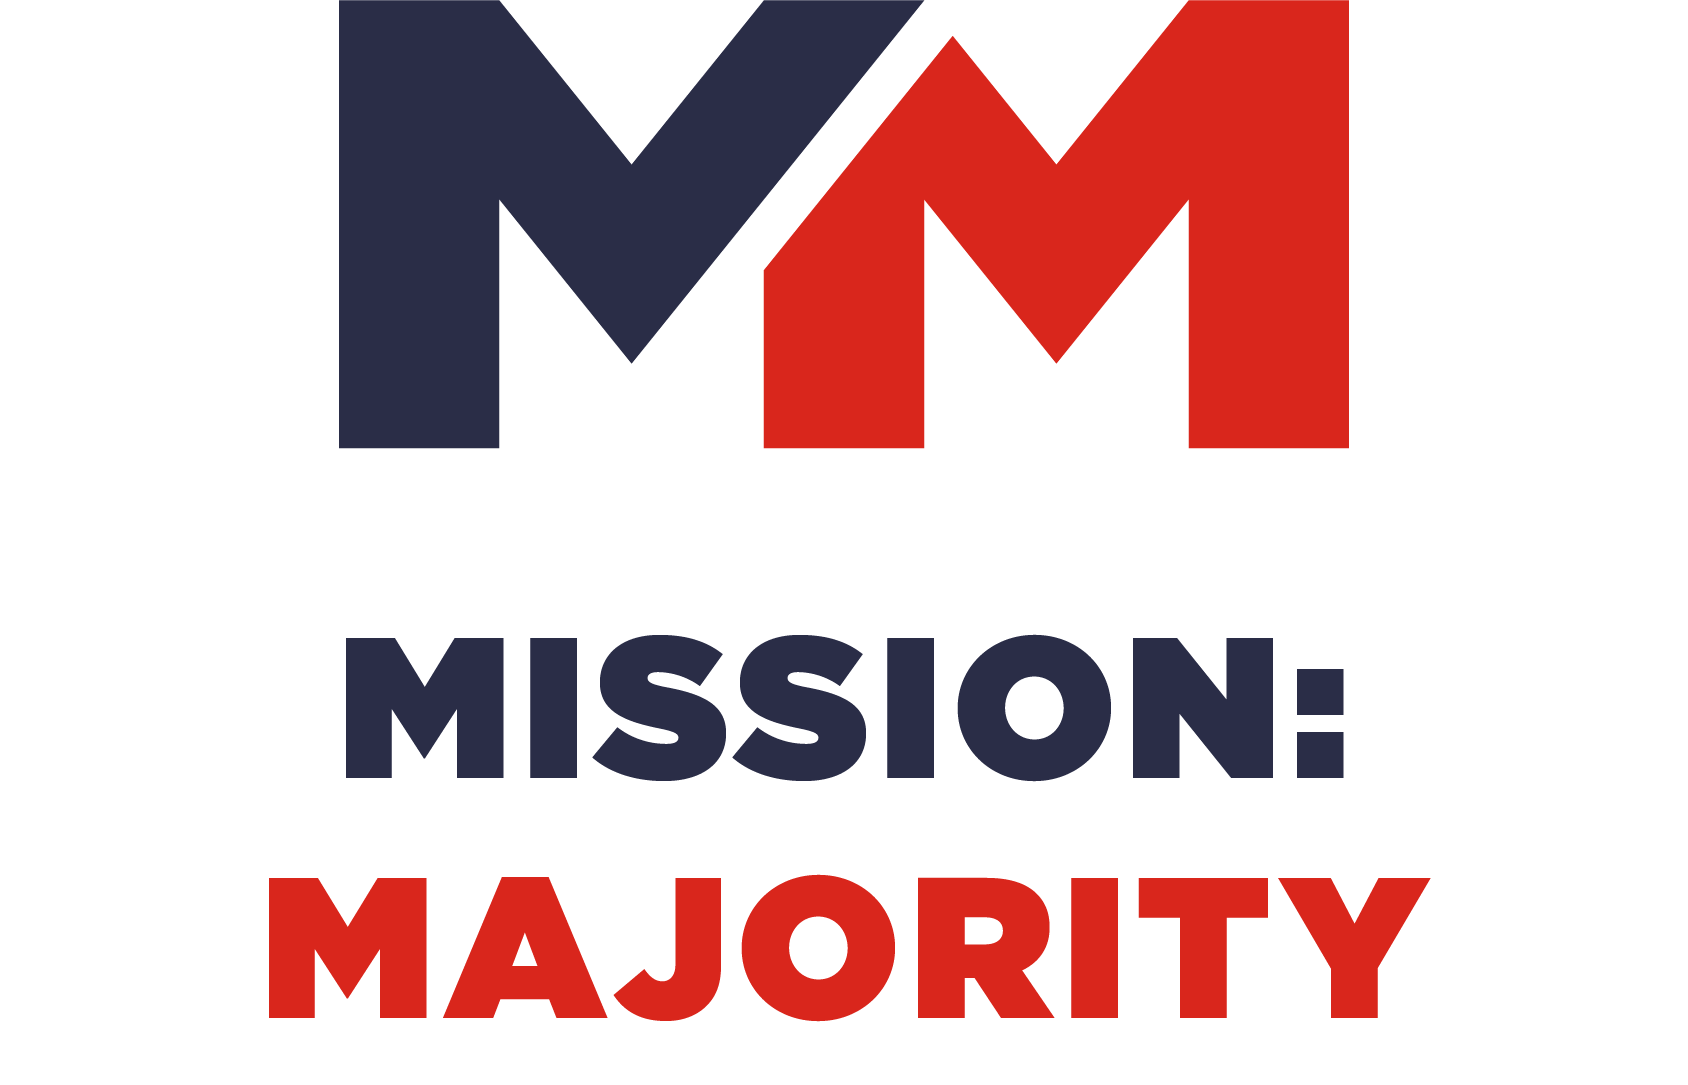 Mission: Majority